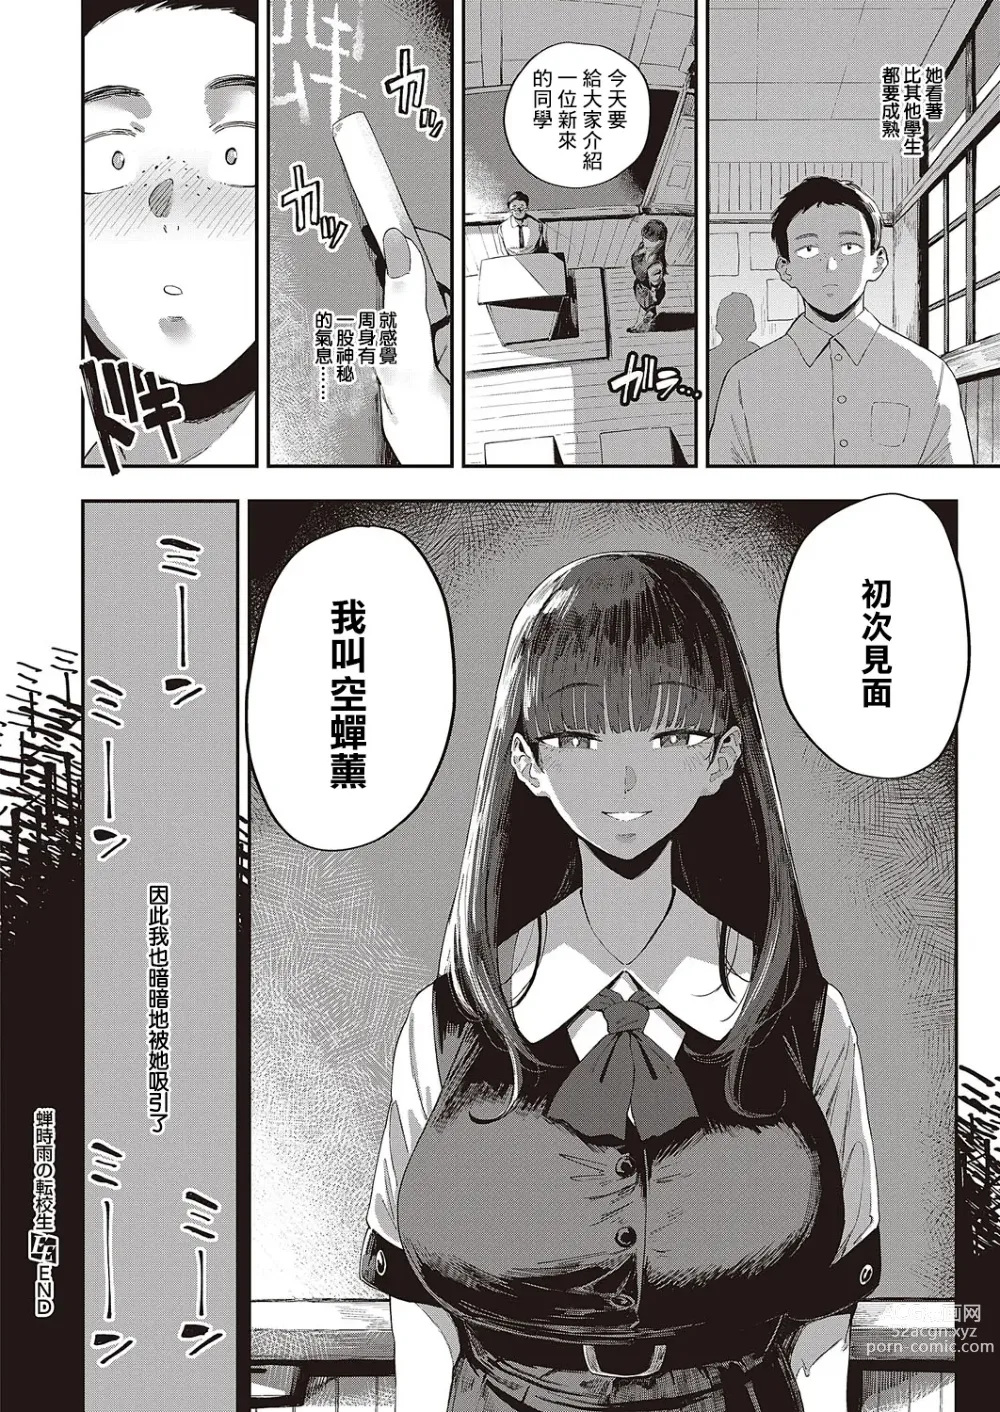 Page 26 of manga Semishigure no Tenkousei